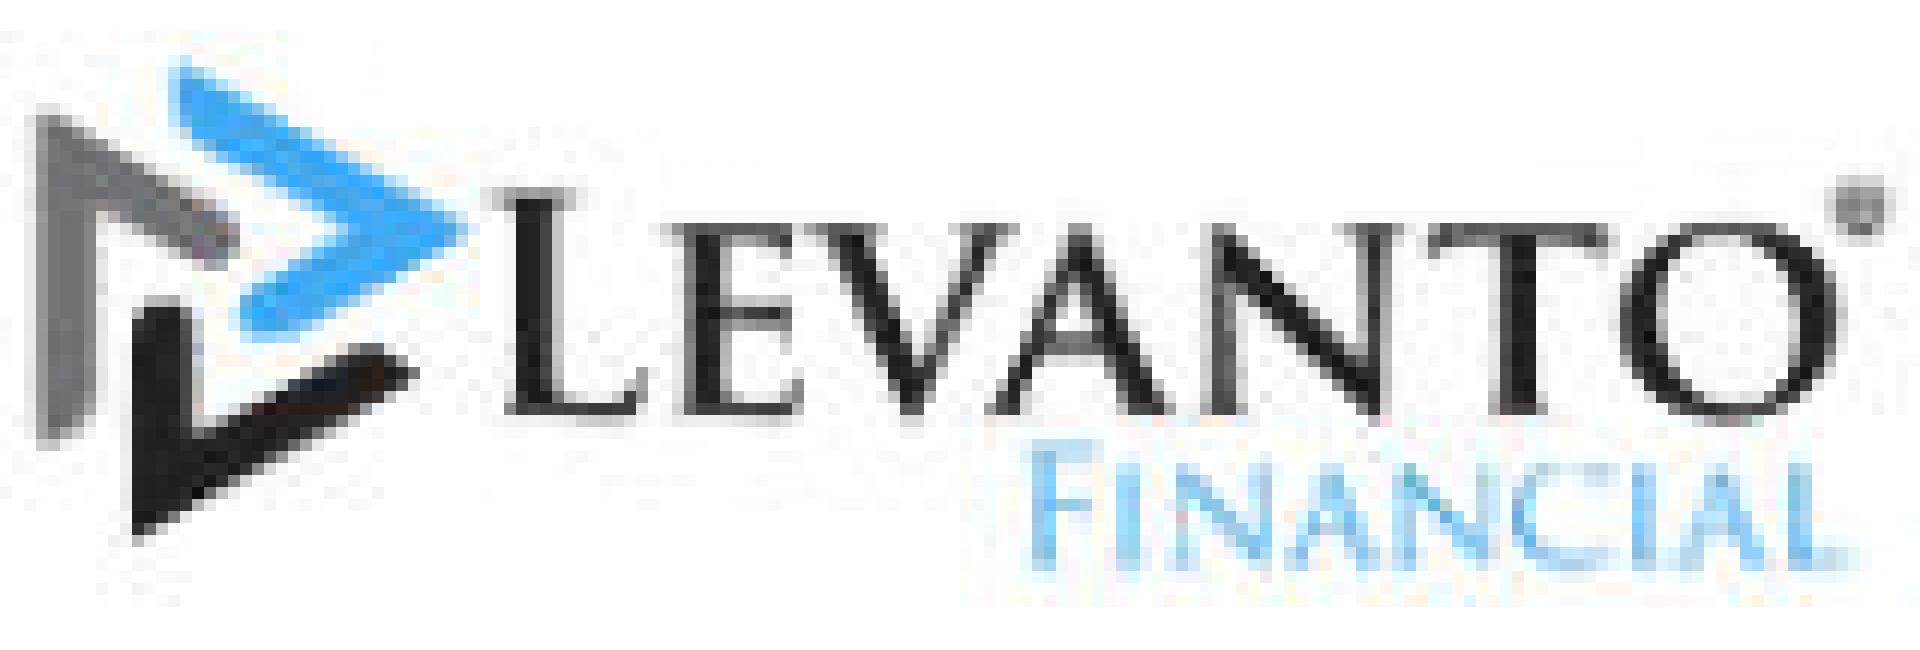 LevantoFinancial-160